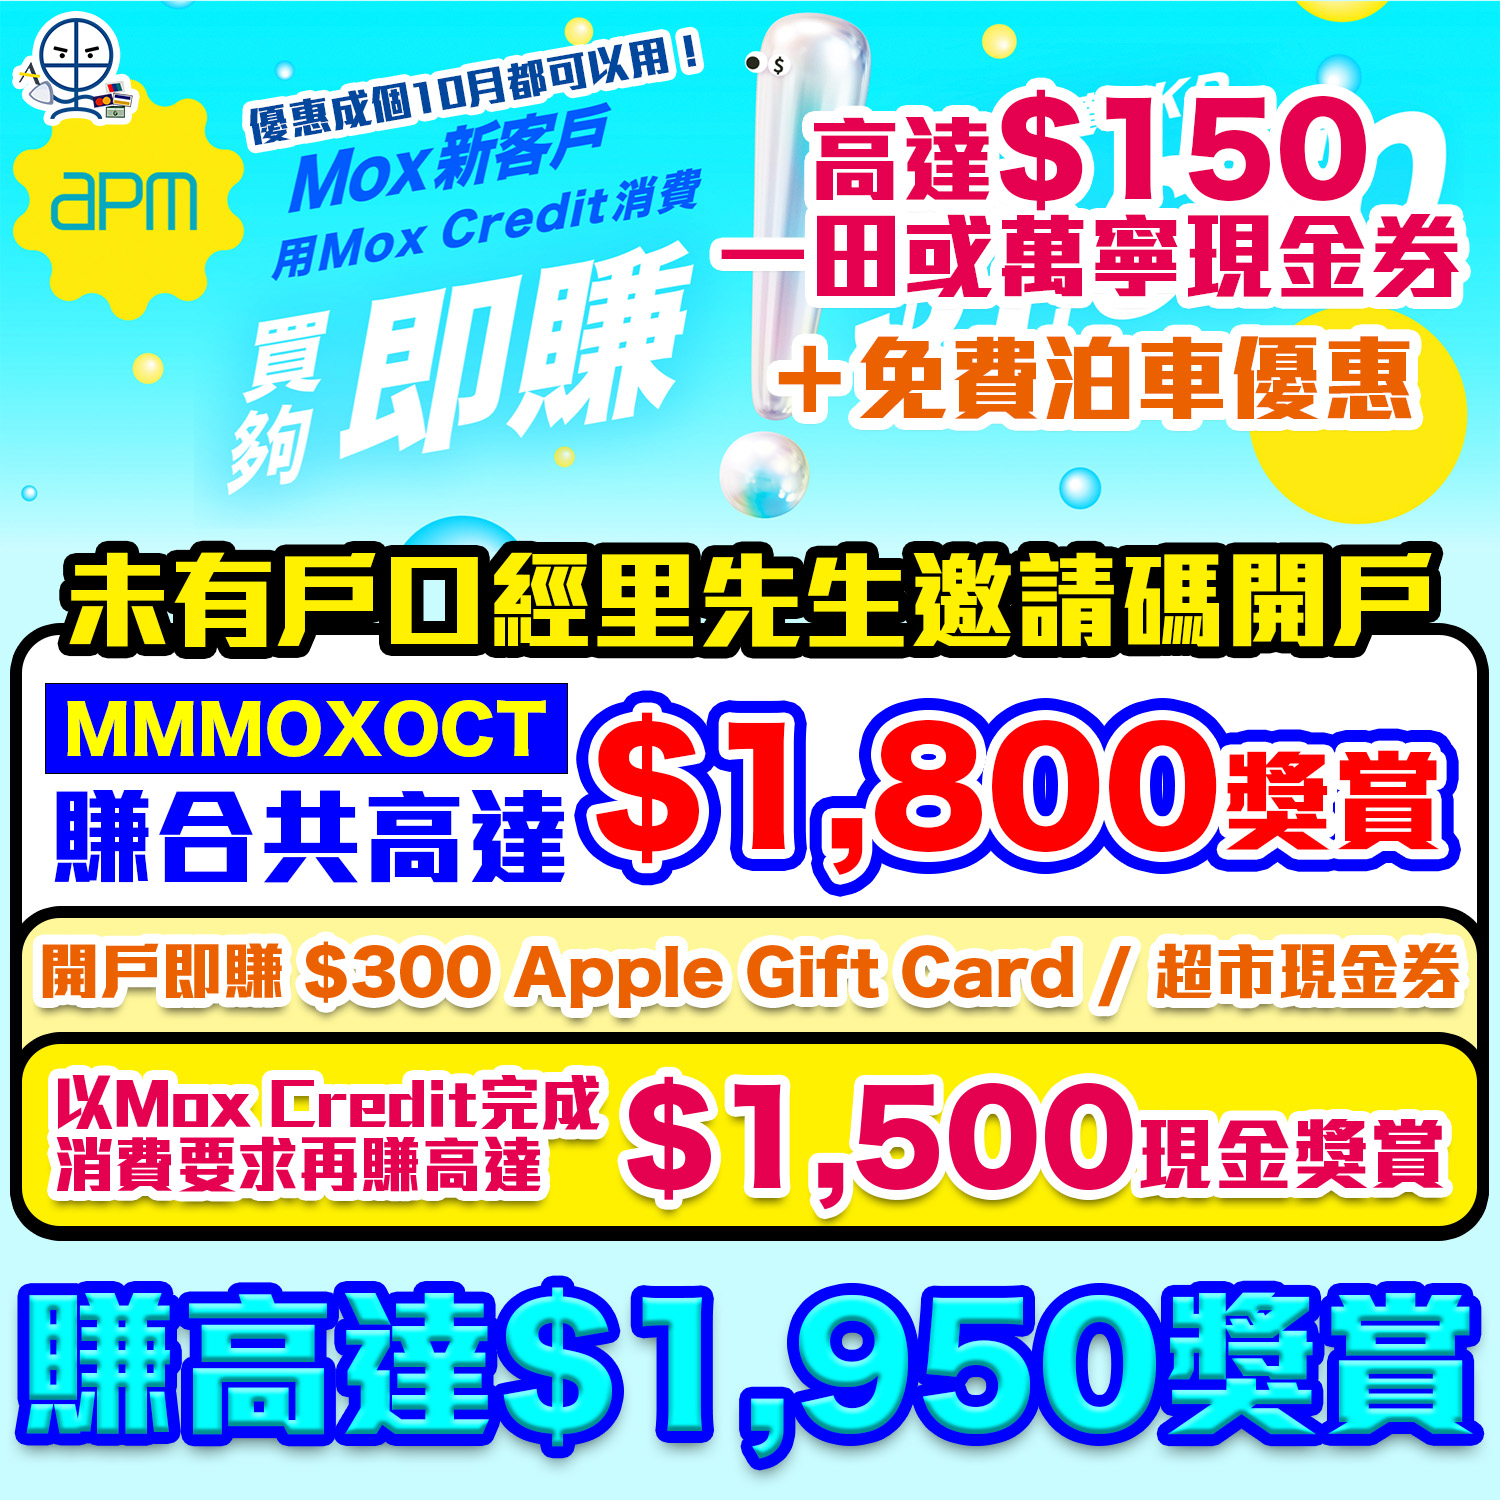 Mox Bank apm商場優惠｜高達HK$150一田或萬寧現金券＋免費泊車優惠！